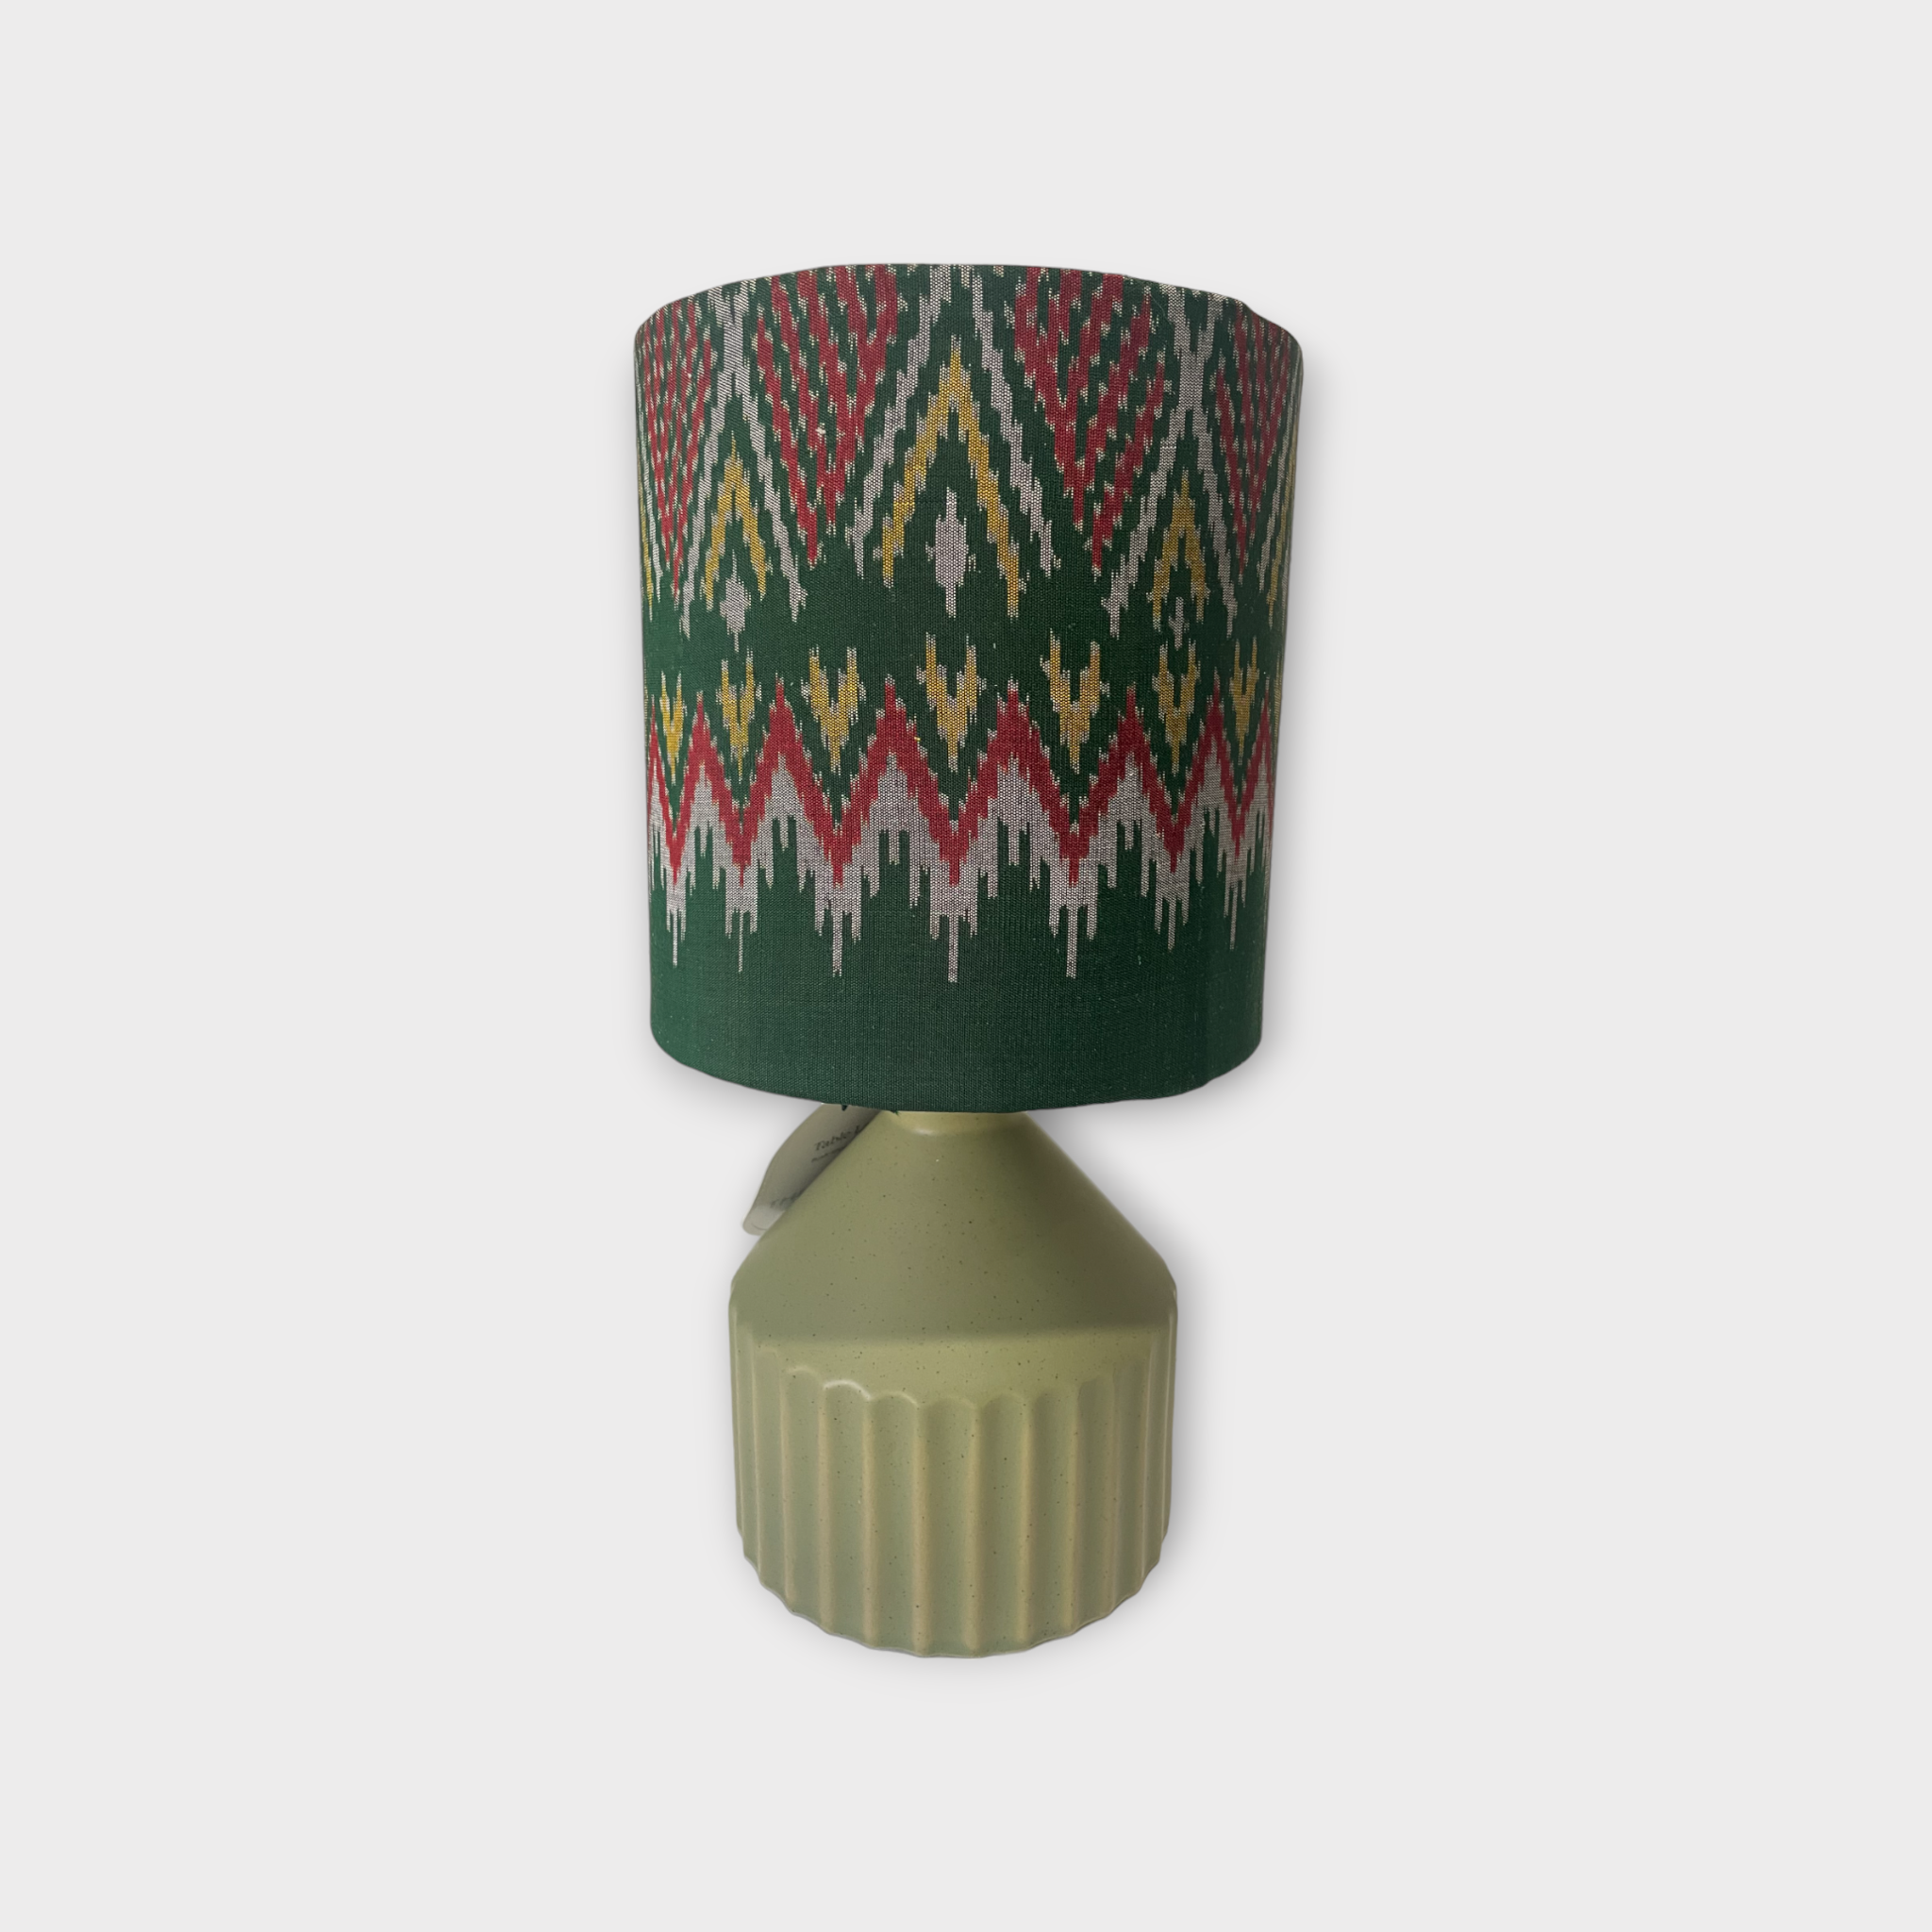 Ikat lamp with green ceramic base